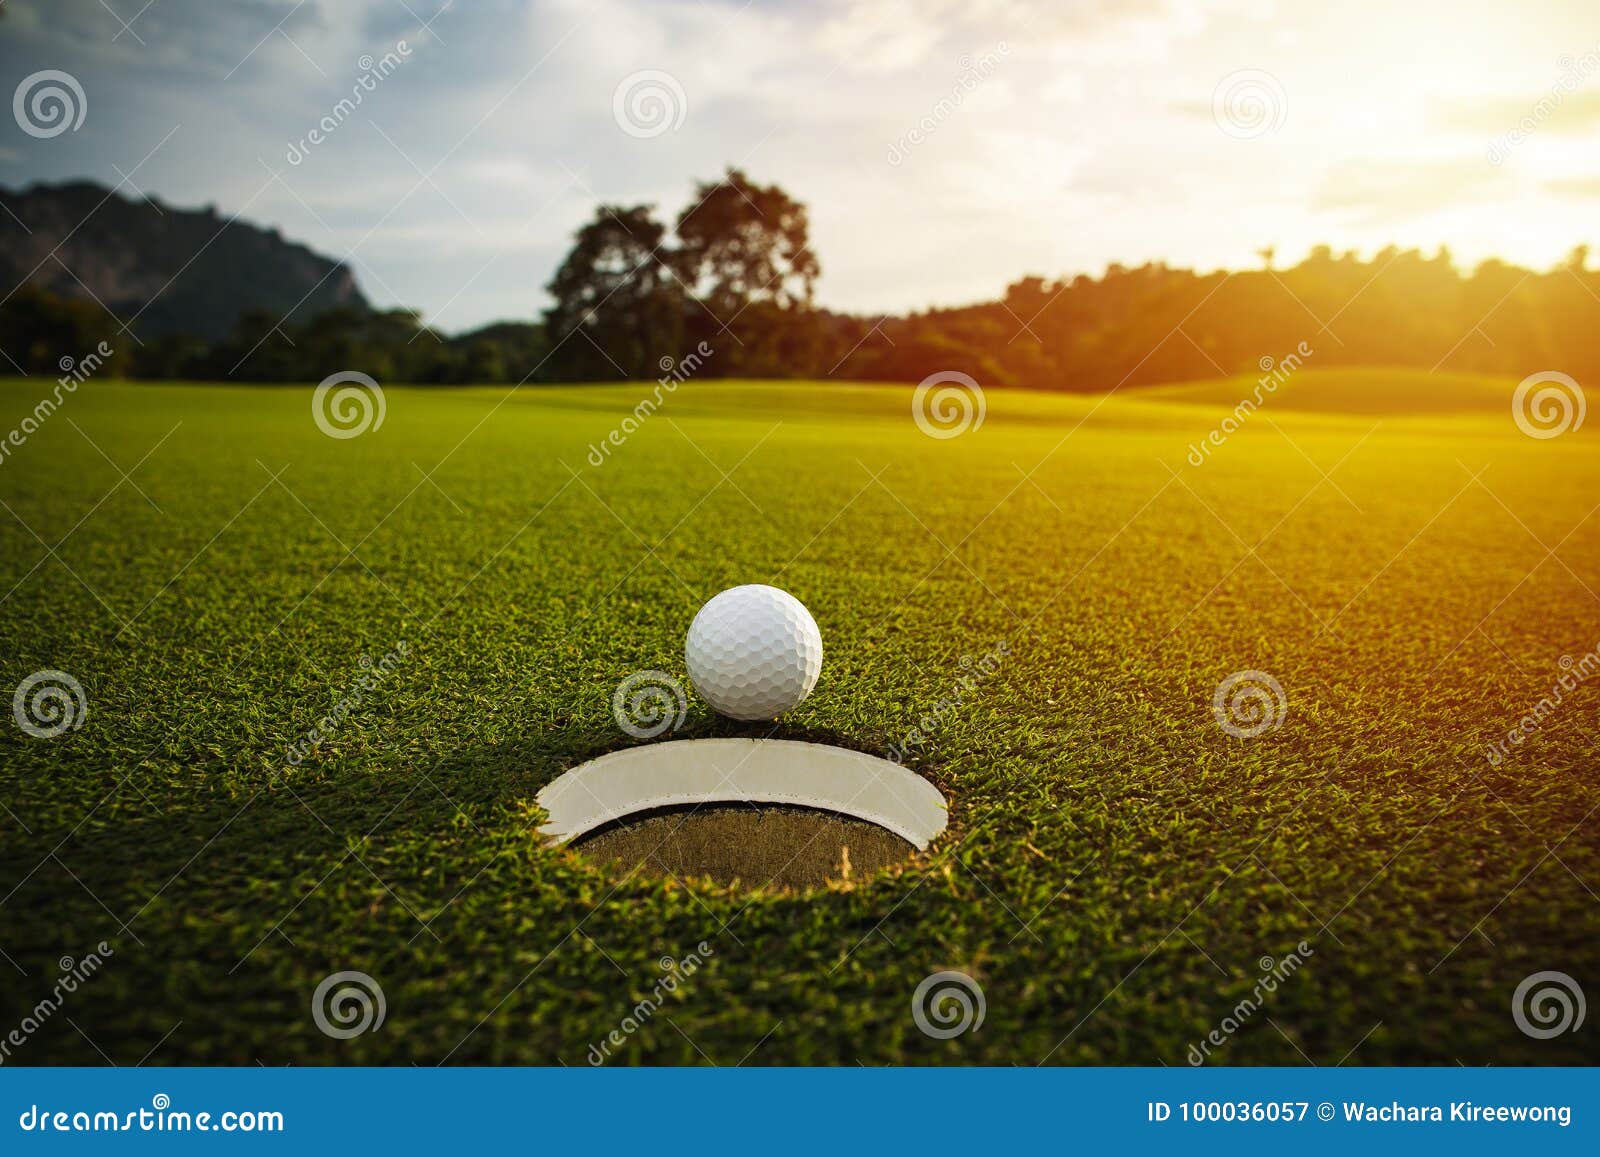 selective focus. white golf ball near hole on green grass good f